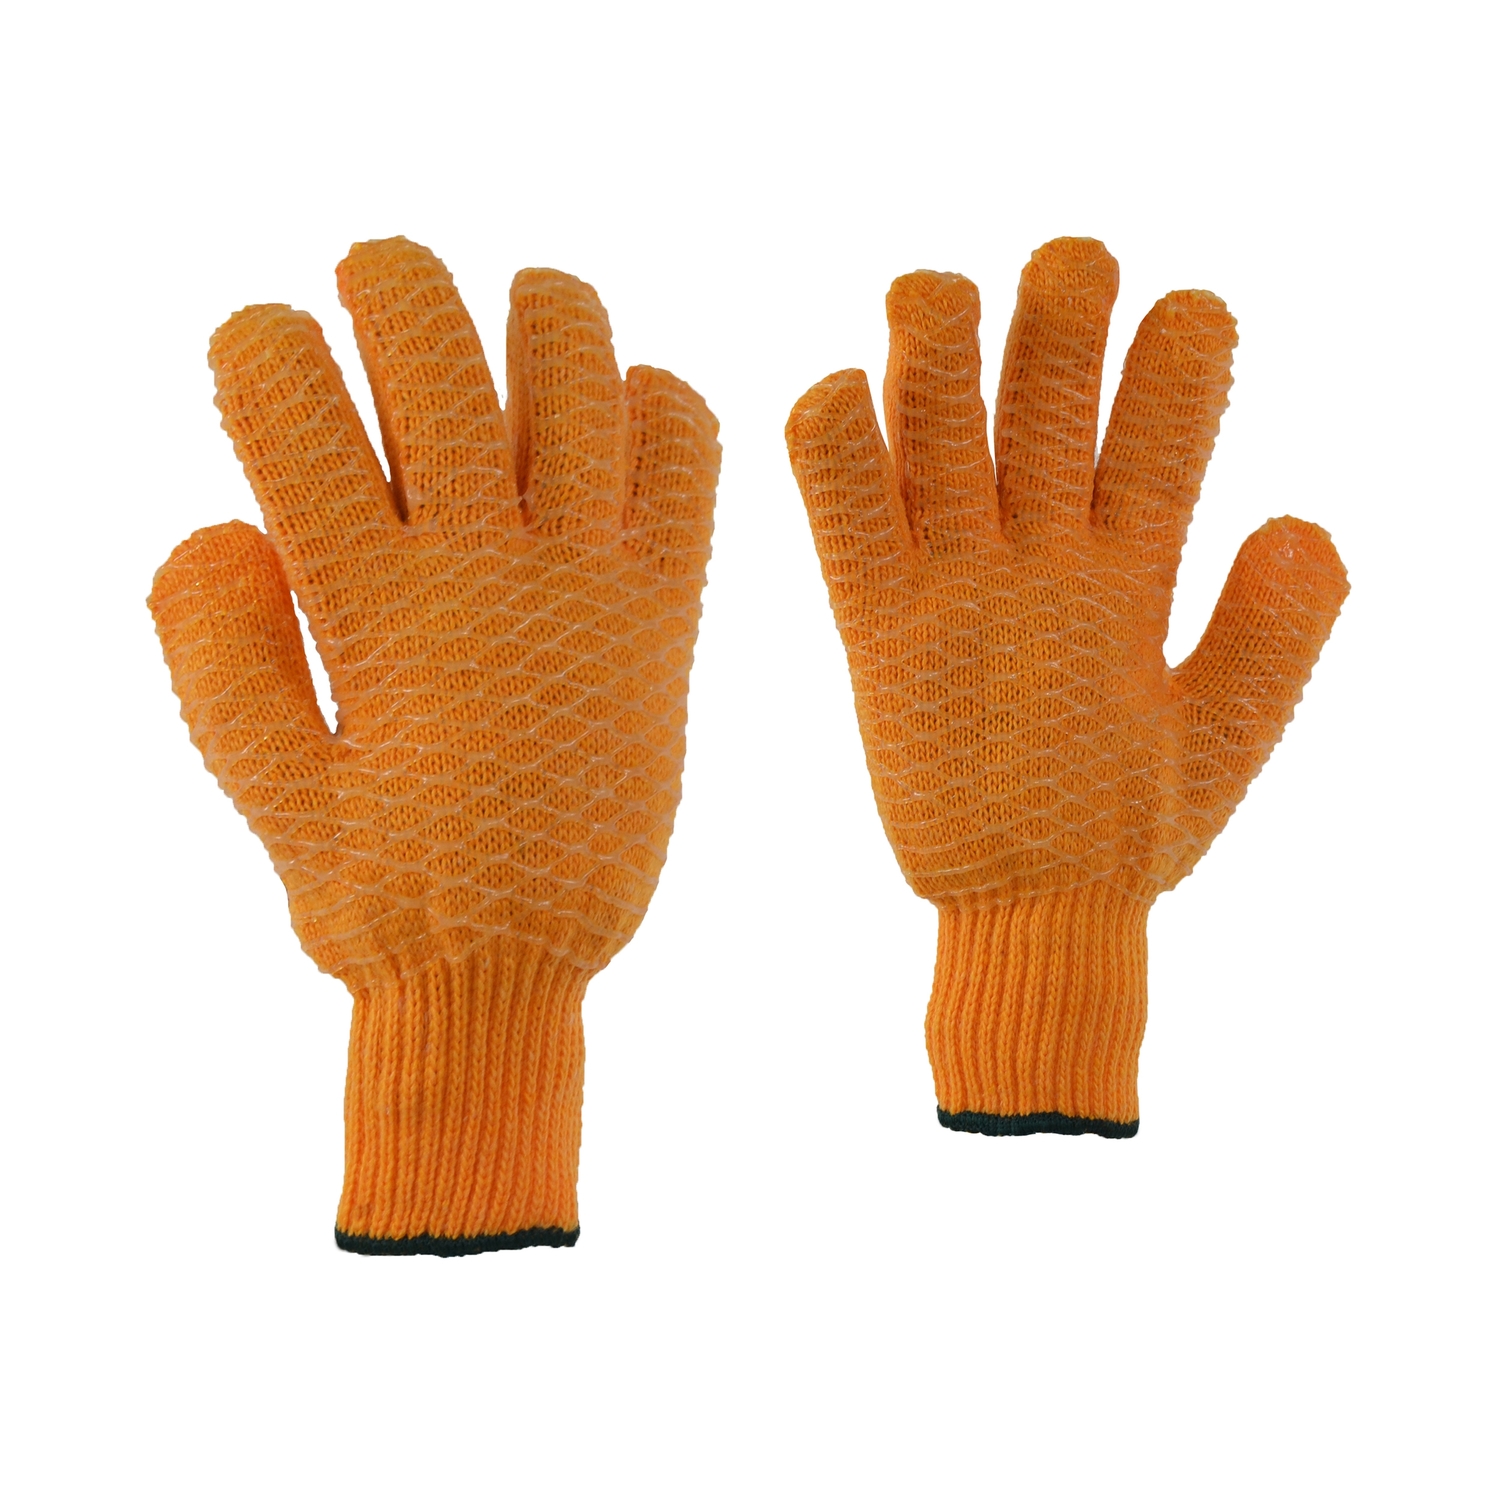 Glove-70% Nylon/30% Poly.-Suregrip-Elast.knit